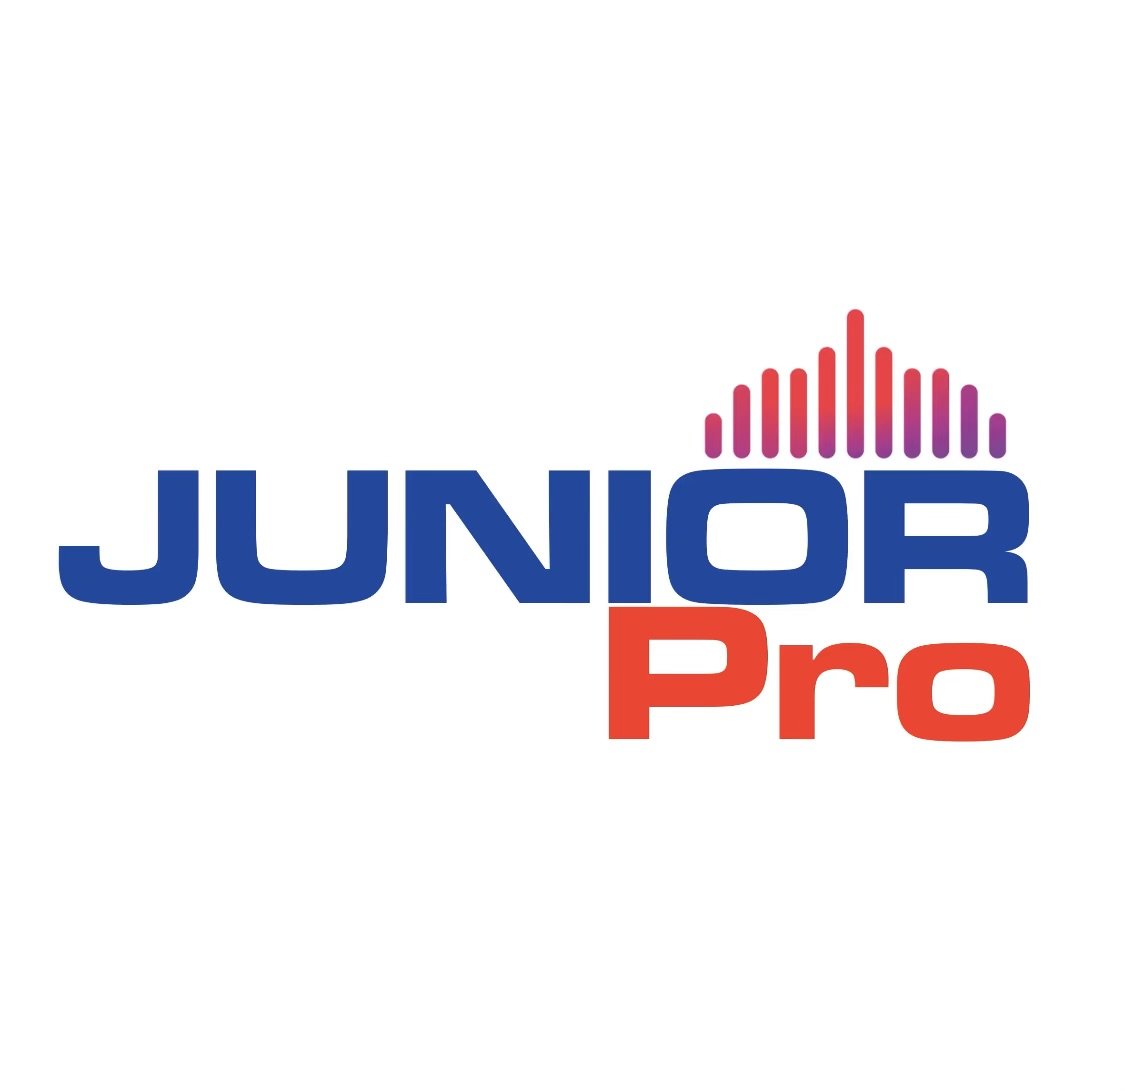 Junior Pro Sound and Lighting